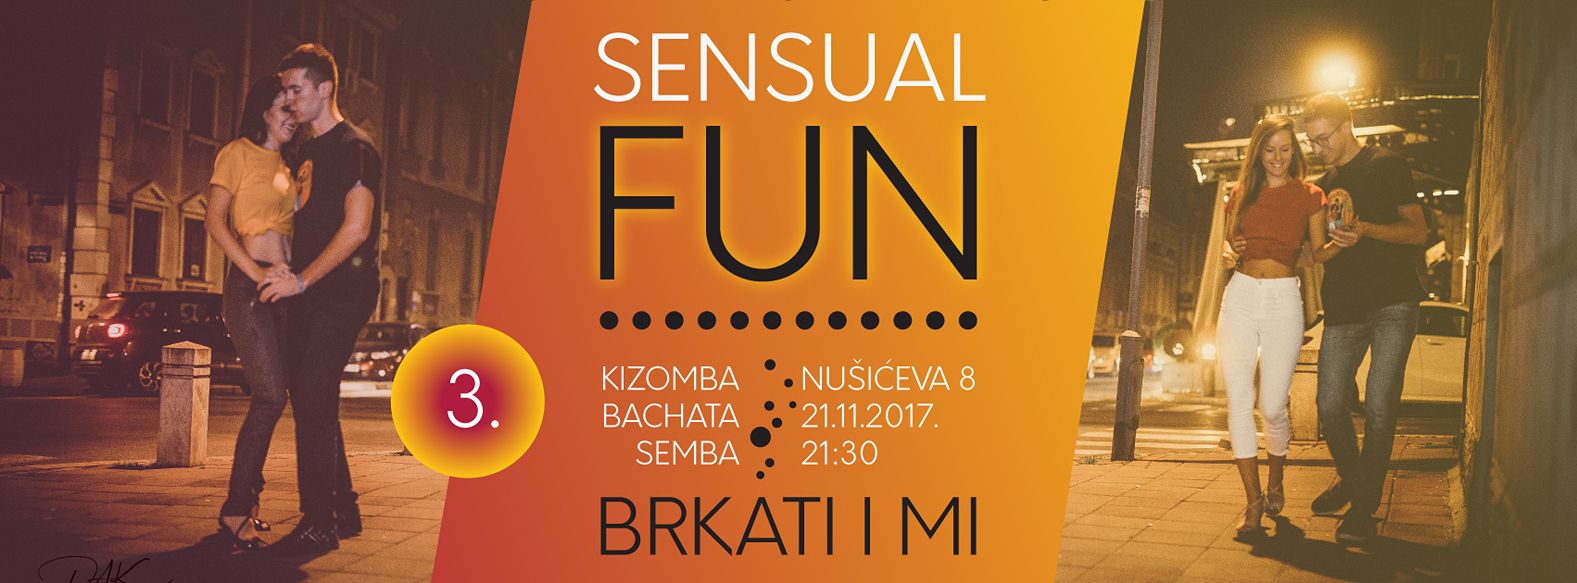 Sensual Fun 21.11.2017. Brkati pub,